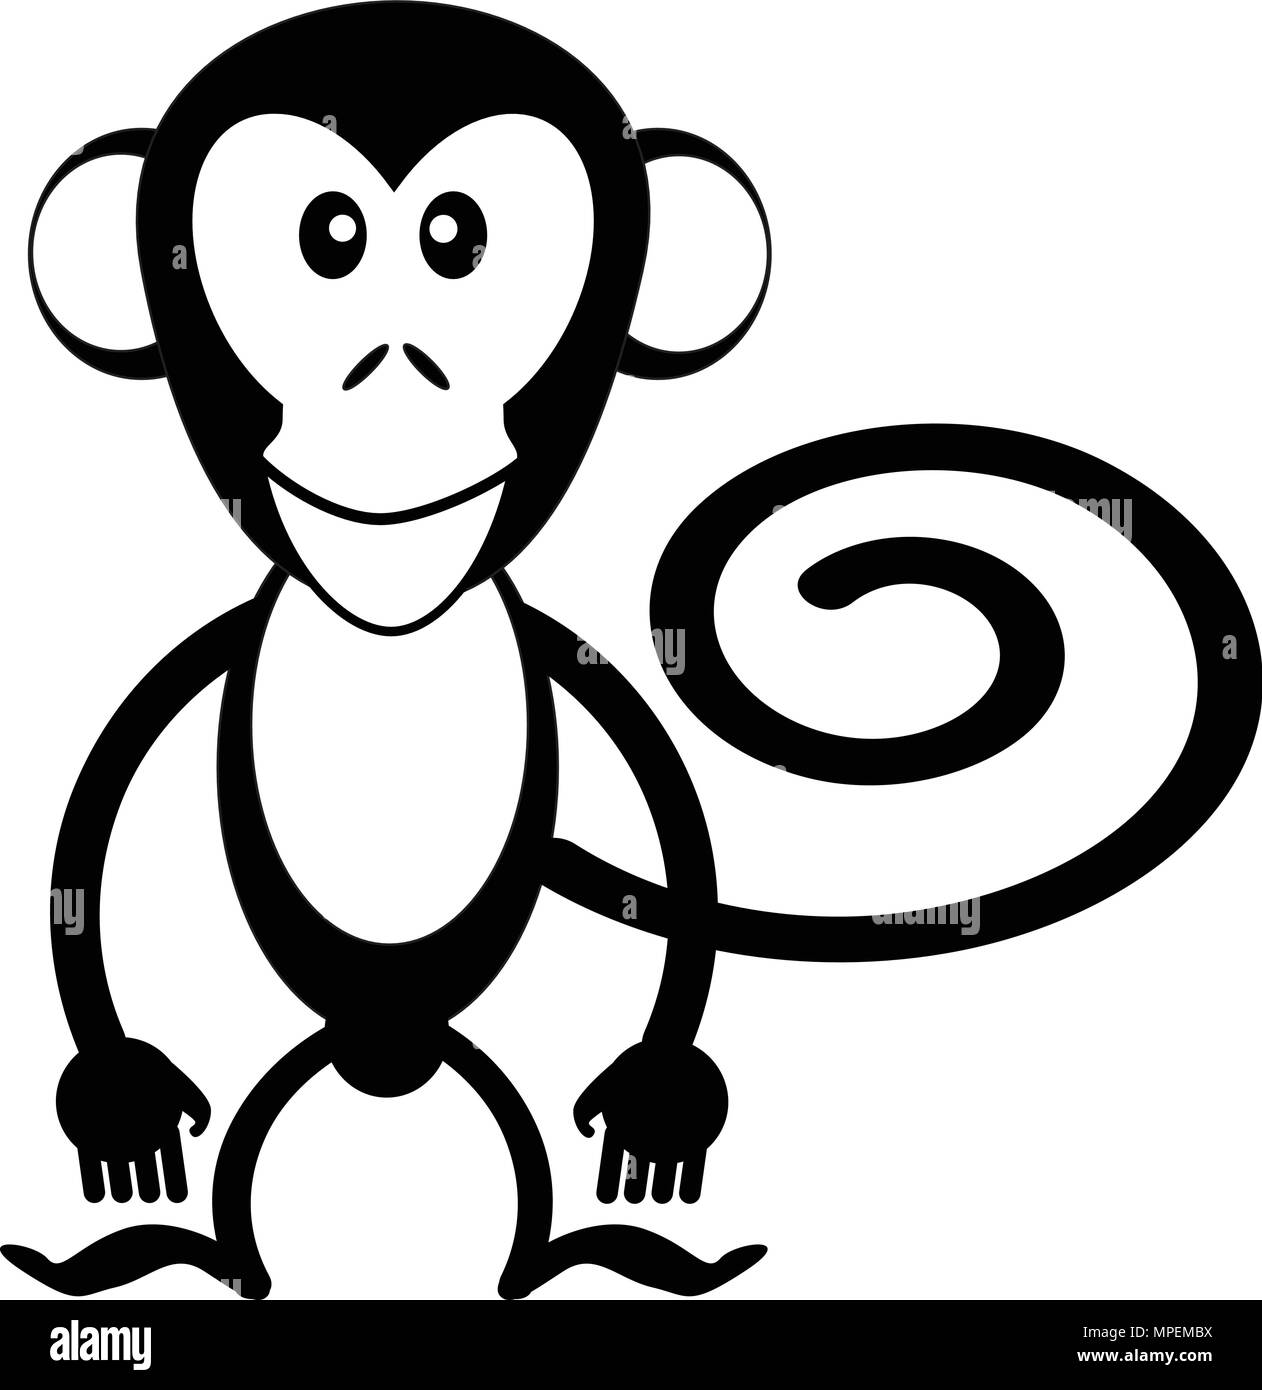 Monkey Cartoon Black And White Vector Illustration Stock Vector Image Art Alamy